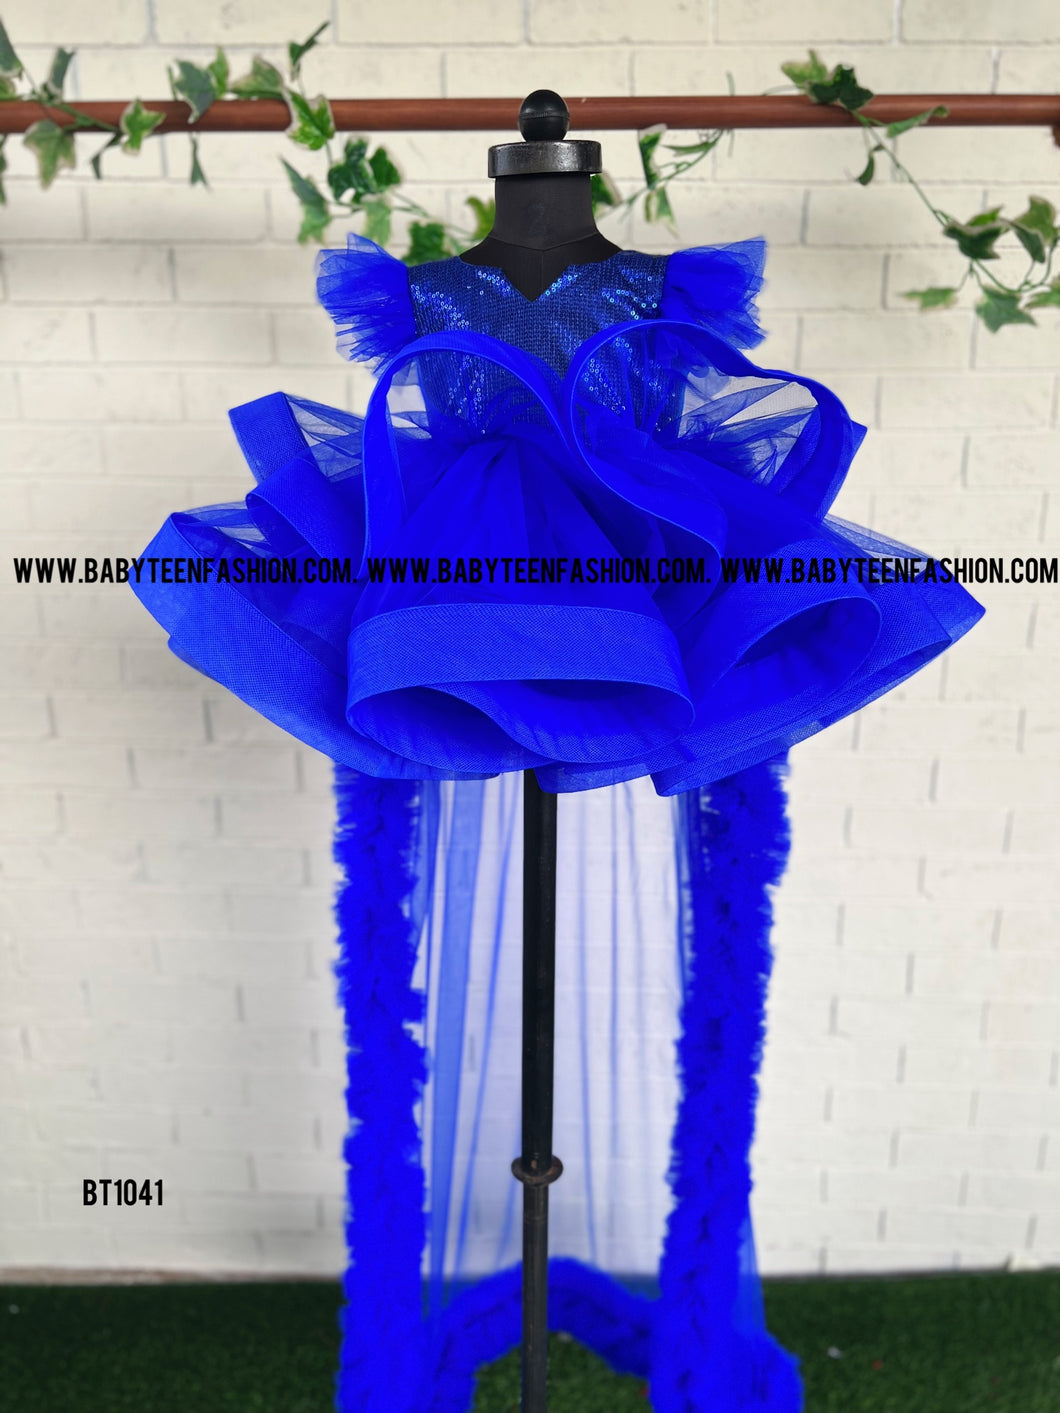 BT1041 Royal Sapphire Elegance Gown - Your Little Star's Dream Dress